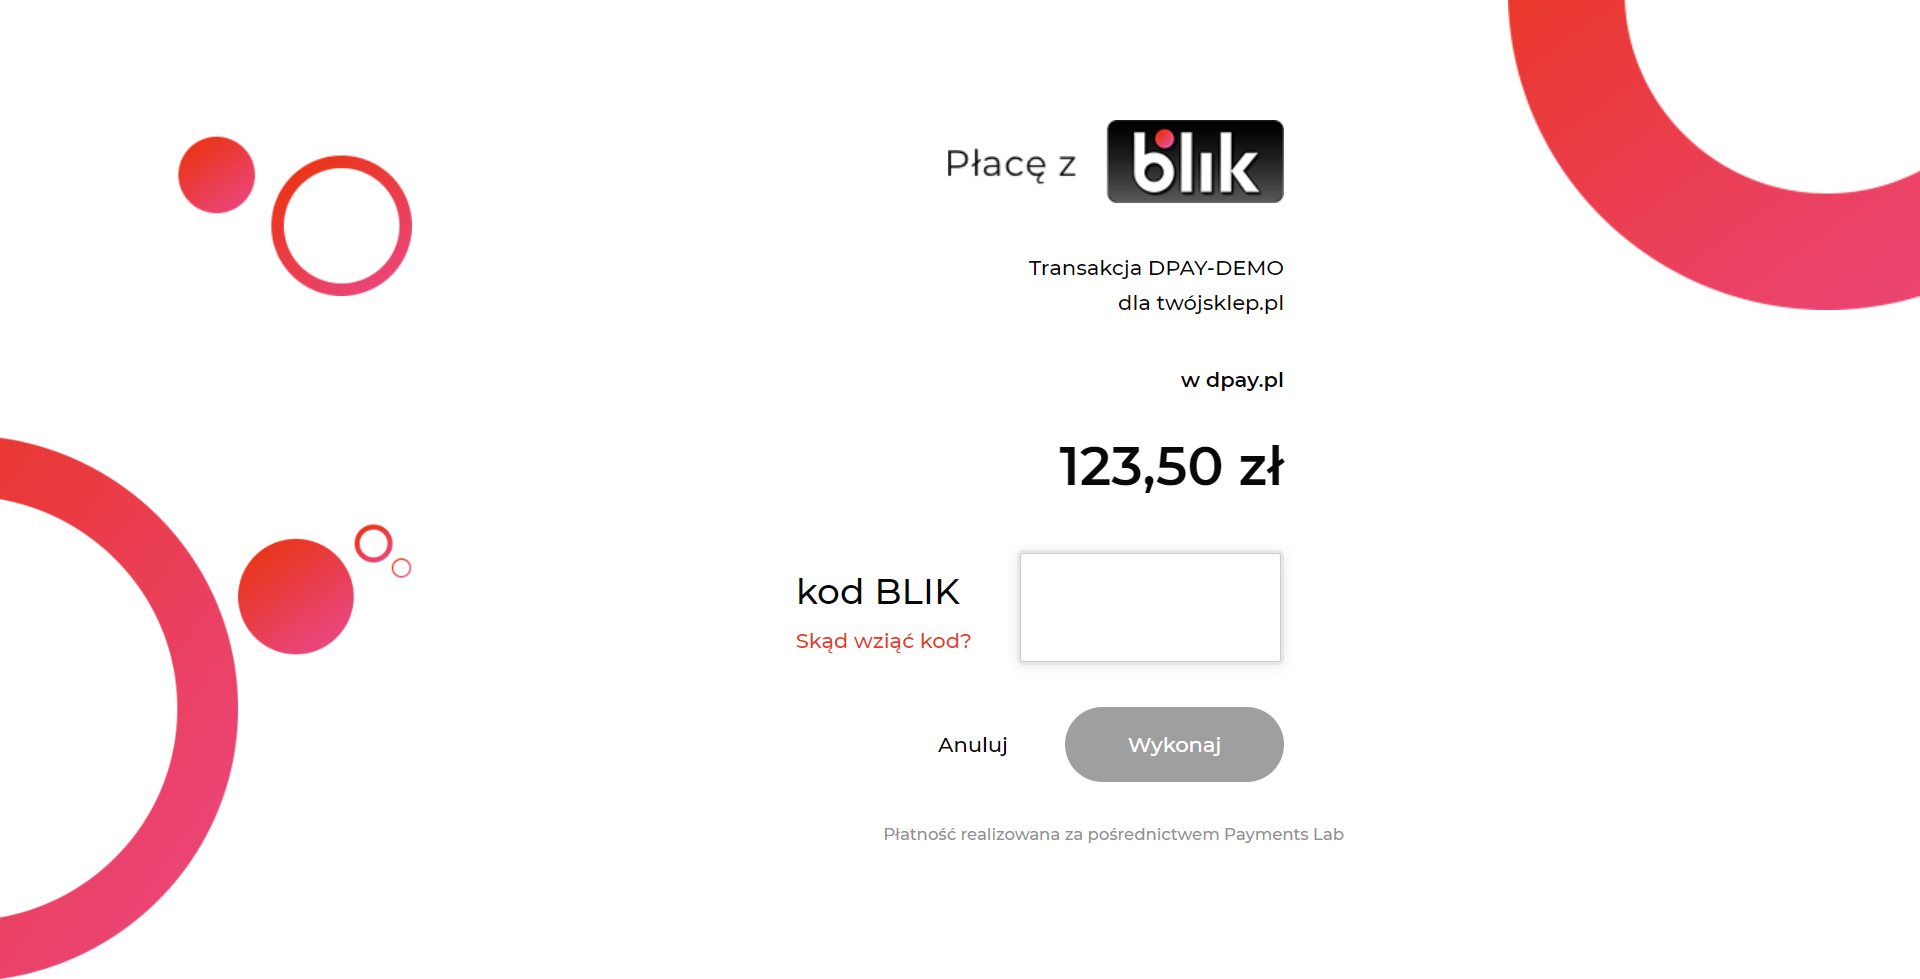 blik transaction website image